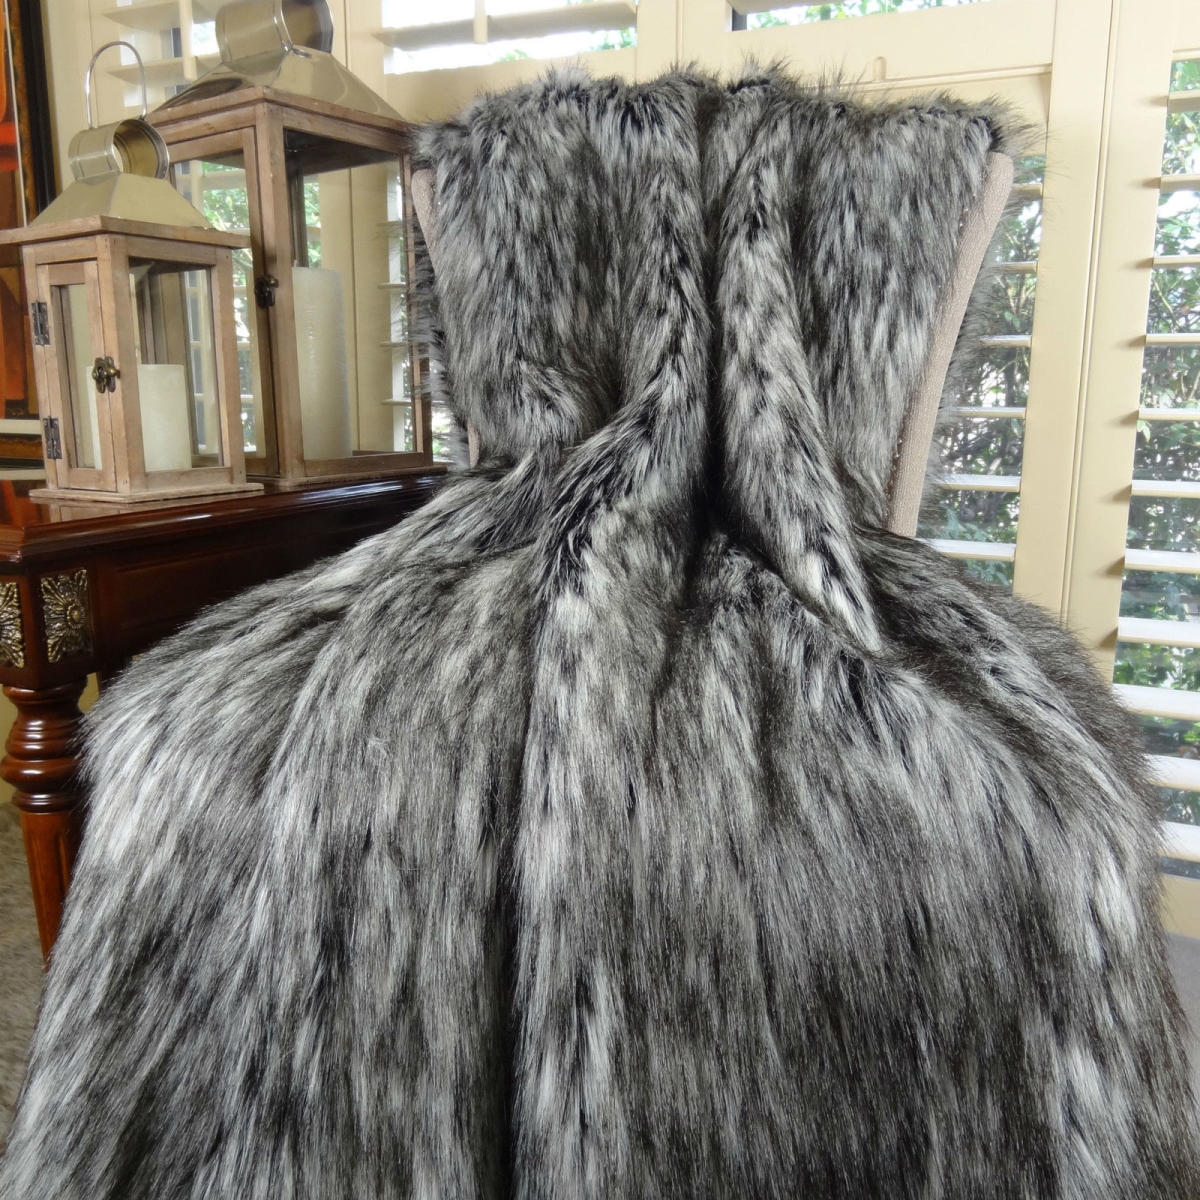 Pb16411-102x116 Luxury Faux Fur Siberian Husky Blanket, Gray, White & Black - 102 X 116 In.